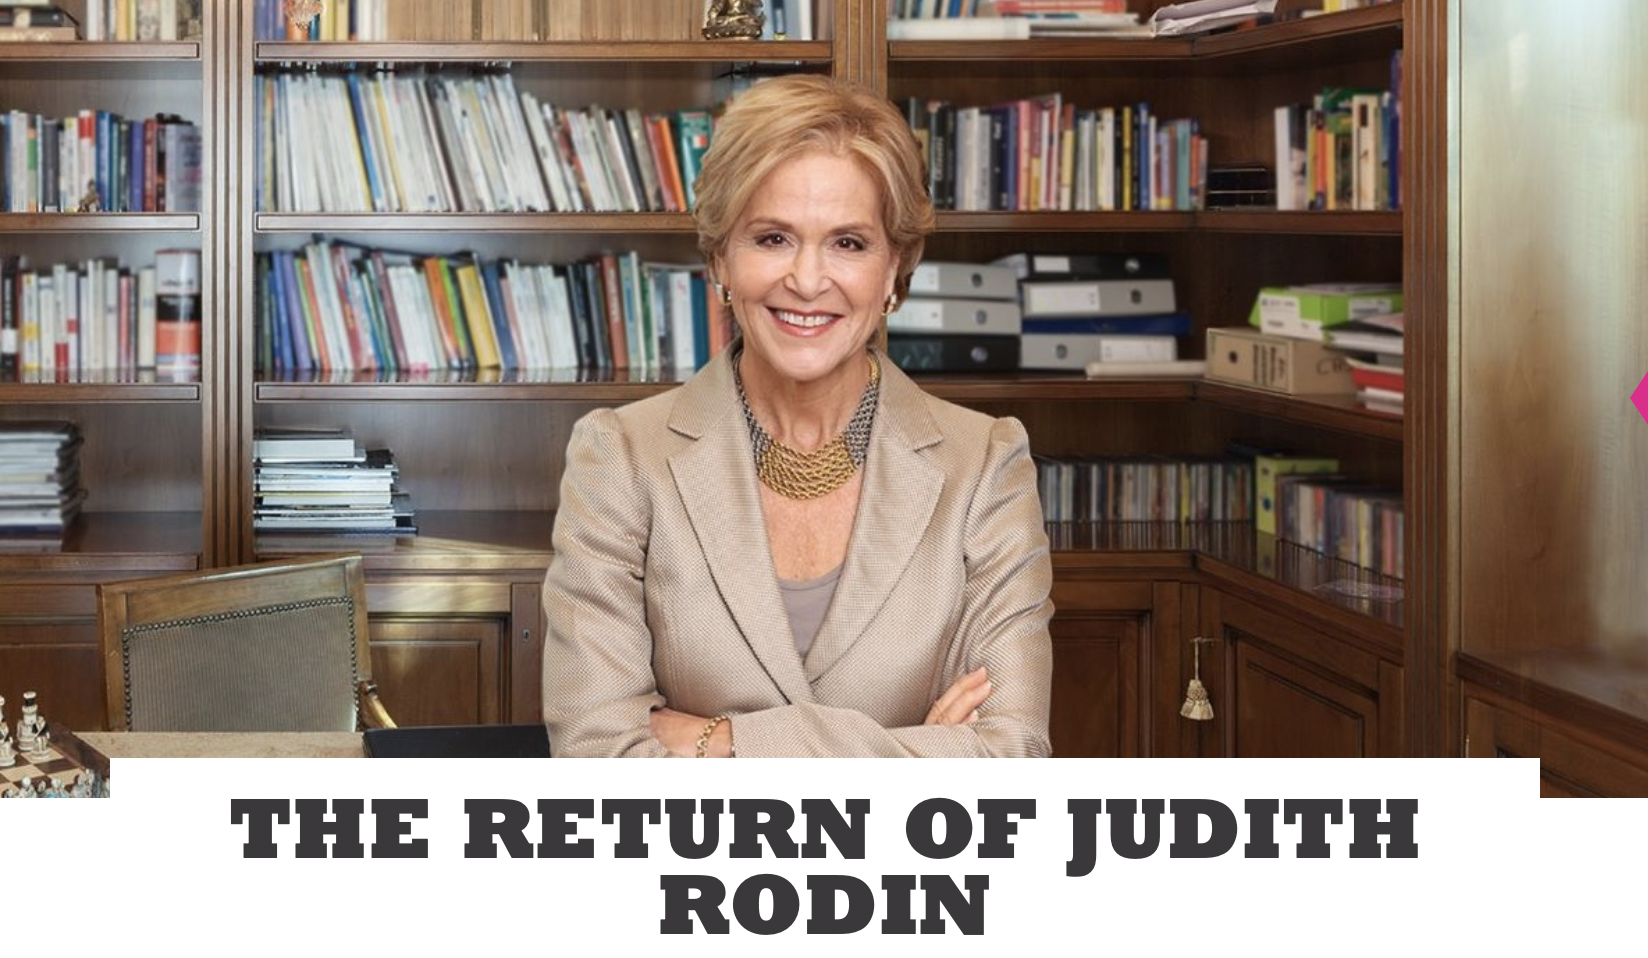 The Return of Judith Rodin